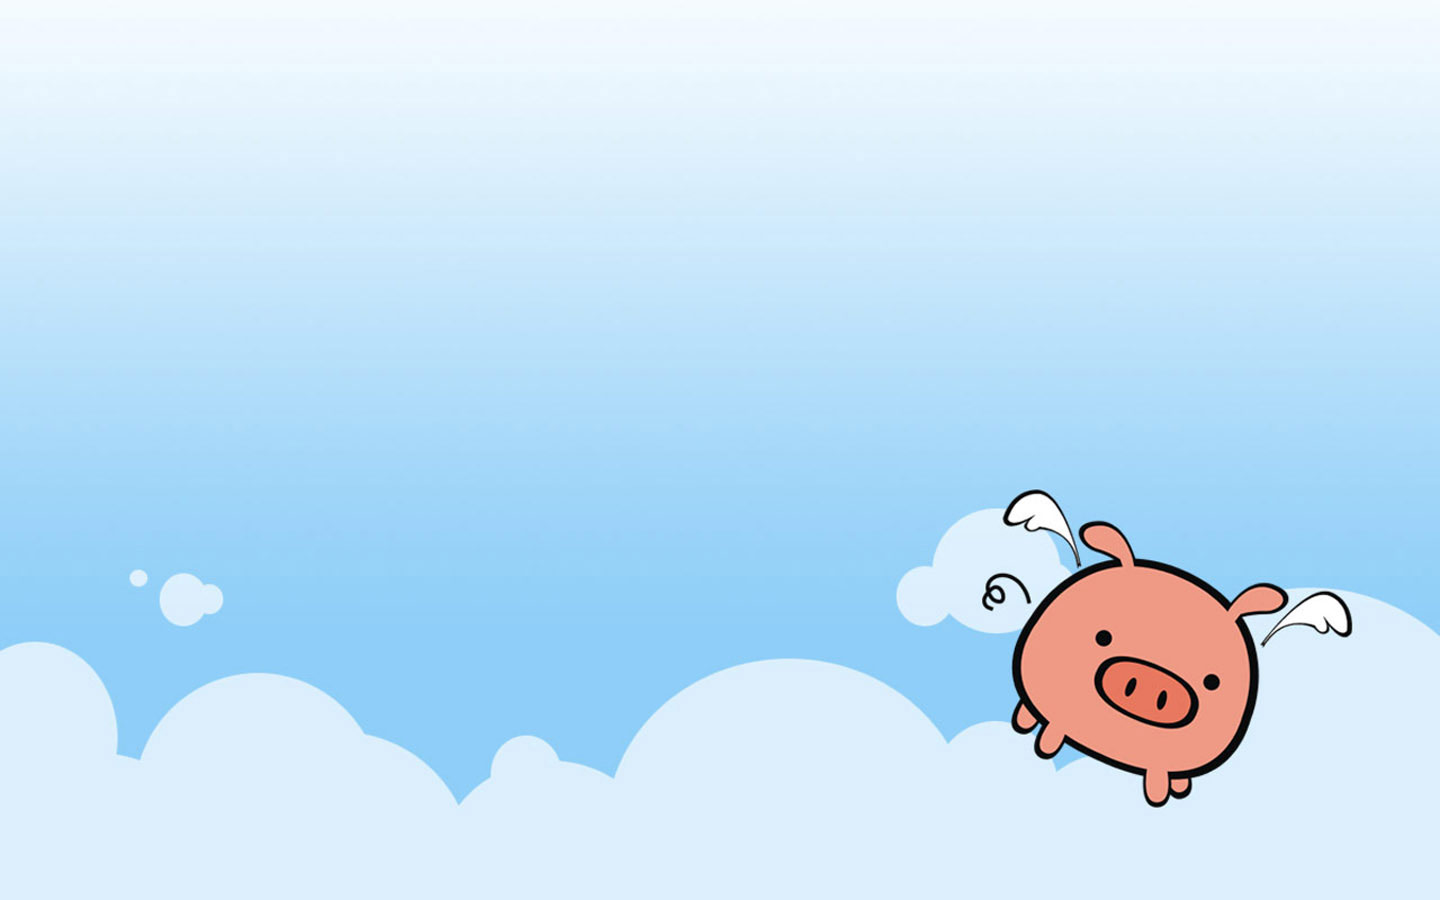 The cute pig illustrator wallpaper comics desktop background